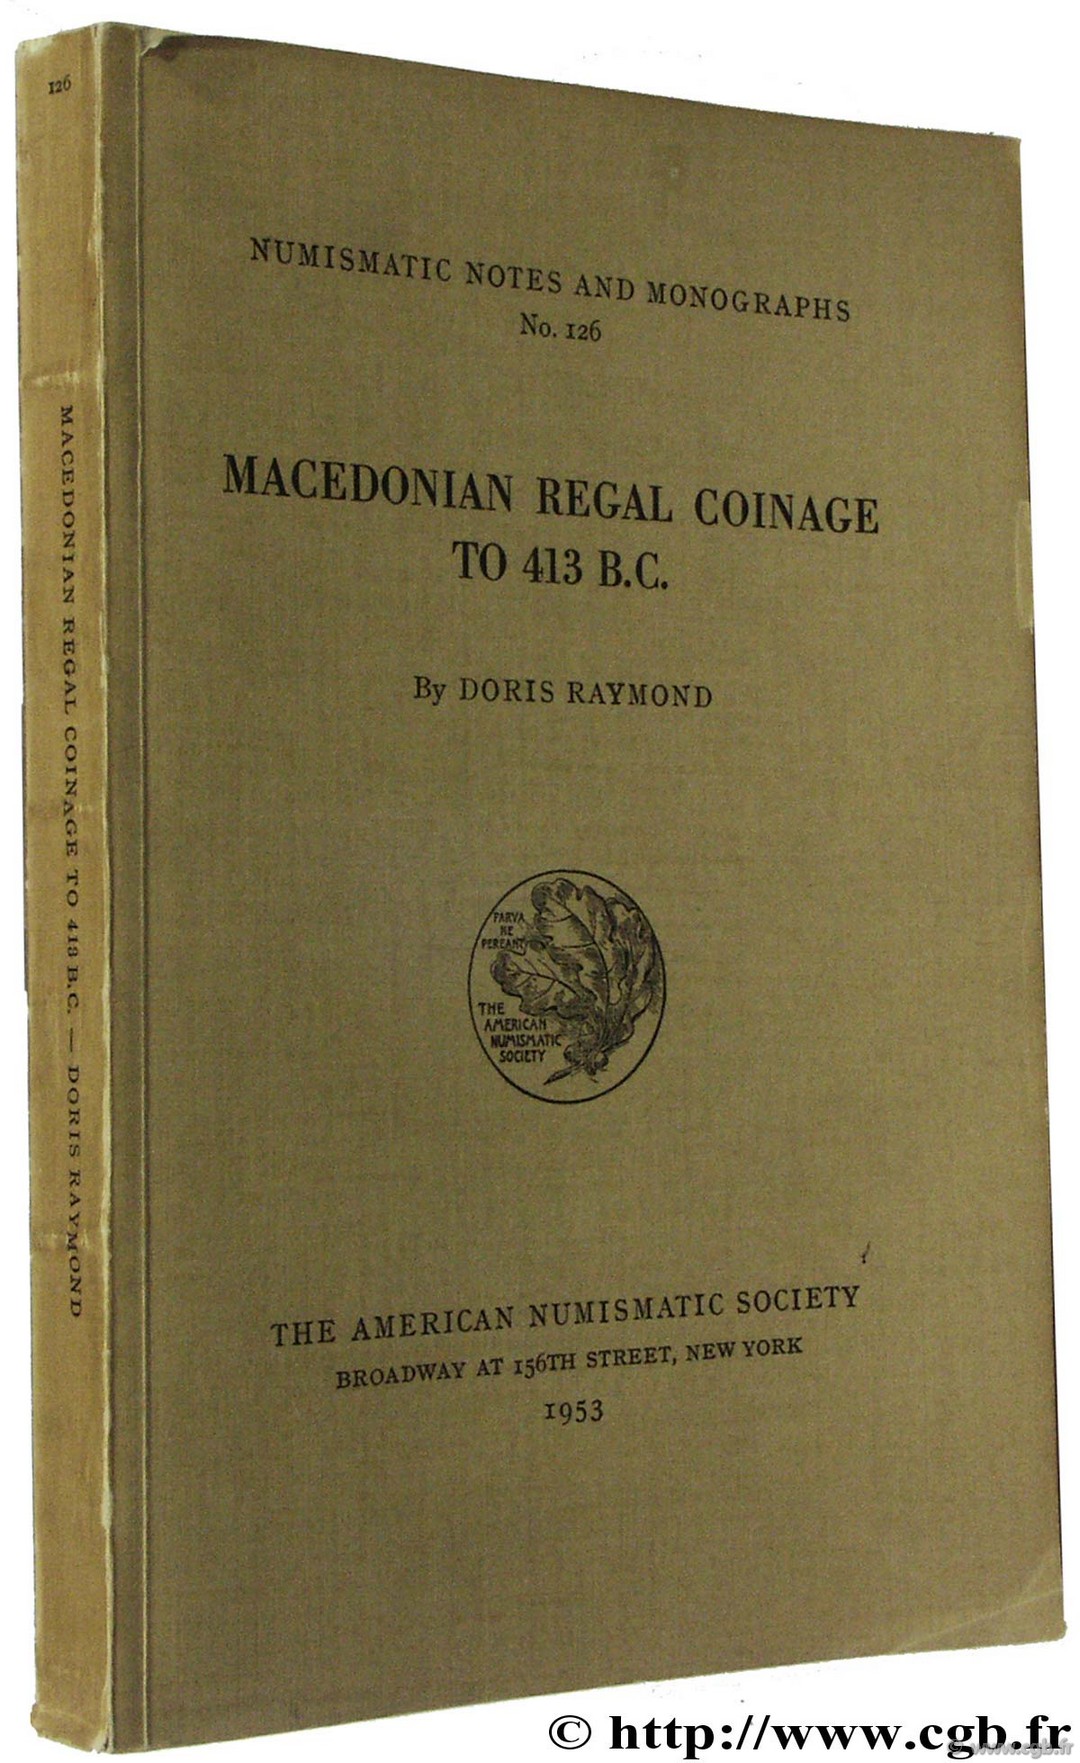 Macedonian Regnal Coinage to 413 B.C., NNM n° 126 RAYMOND D.